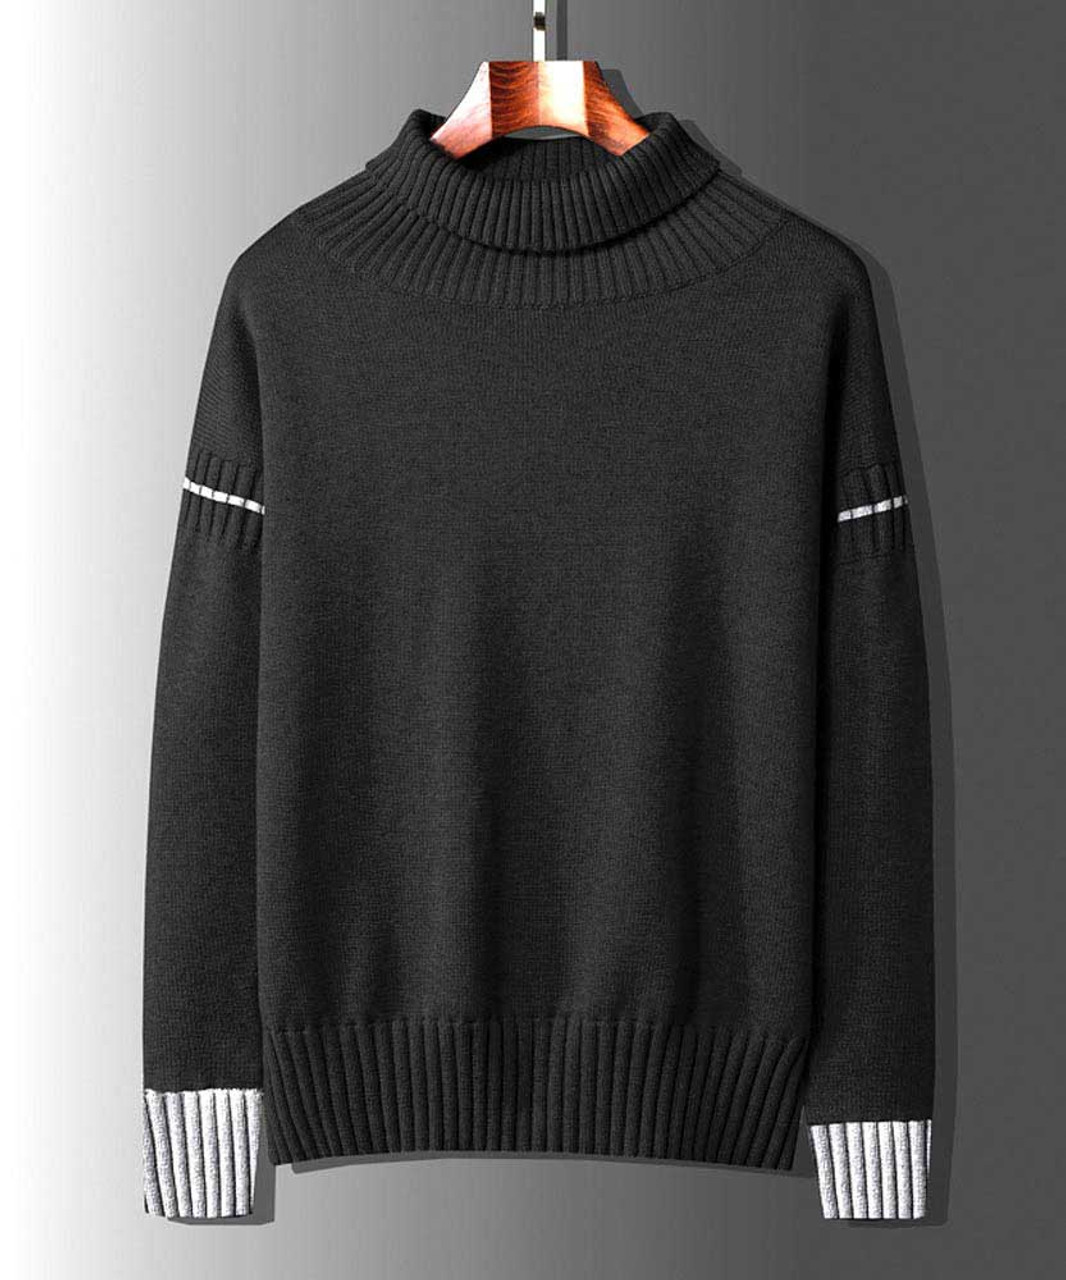 Black stripe detail high neck long sleeve sweater | Mens sweaters ...